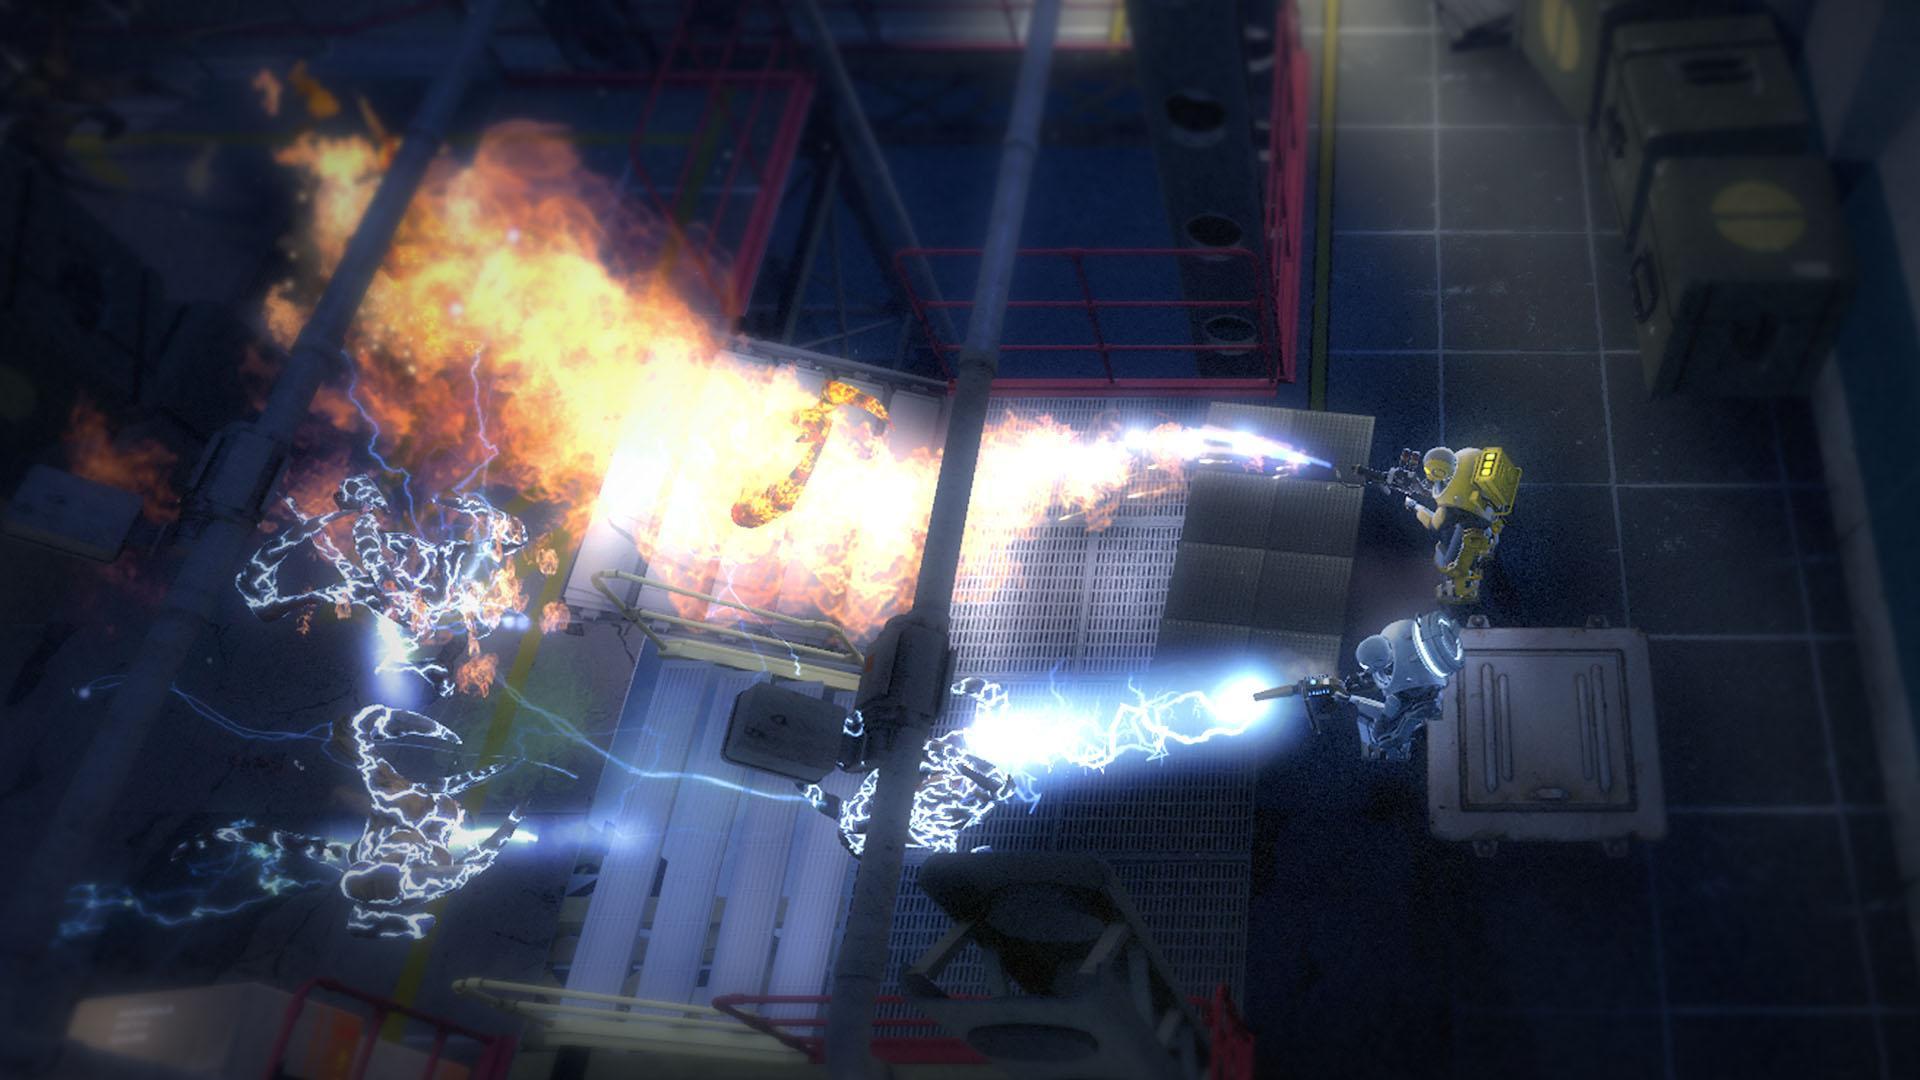 Screenshot №2 from game Alien Swarm